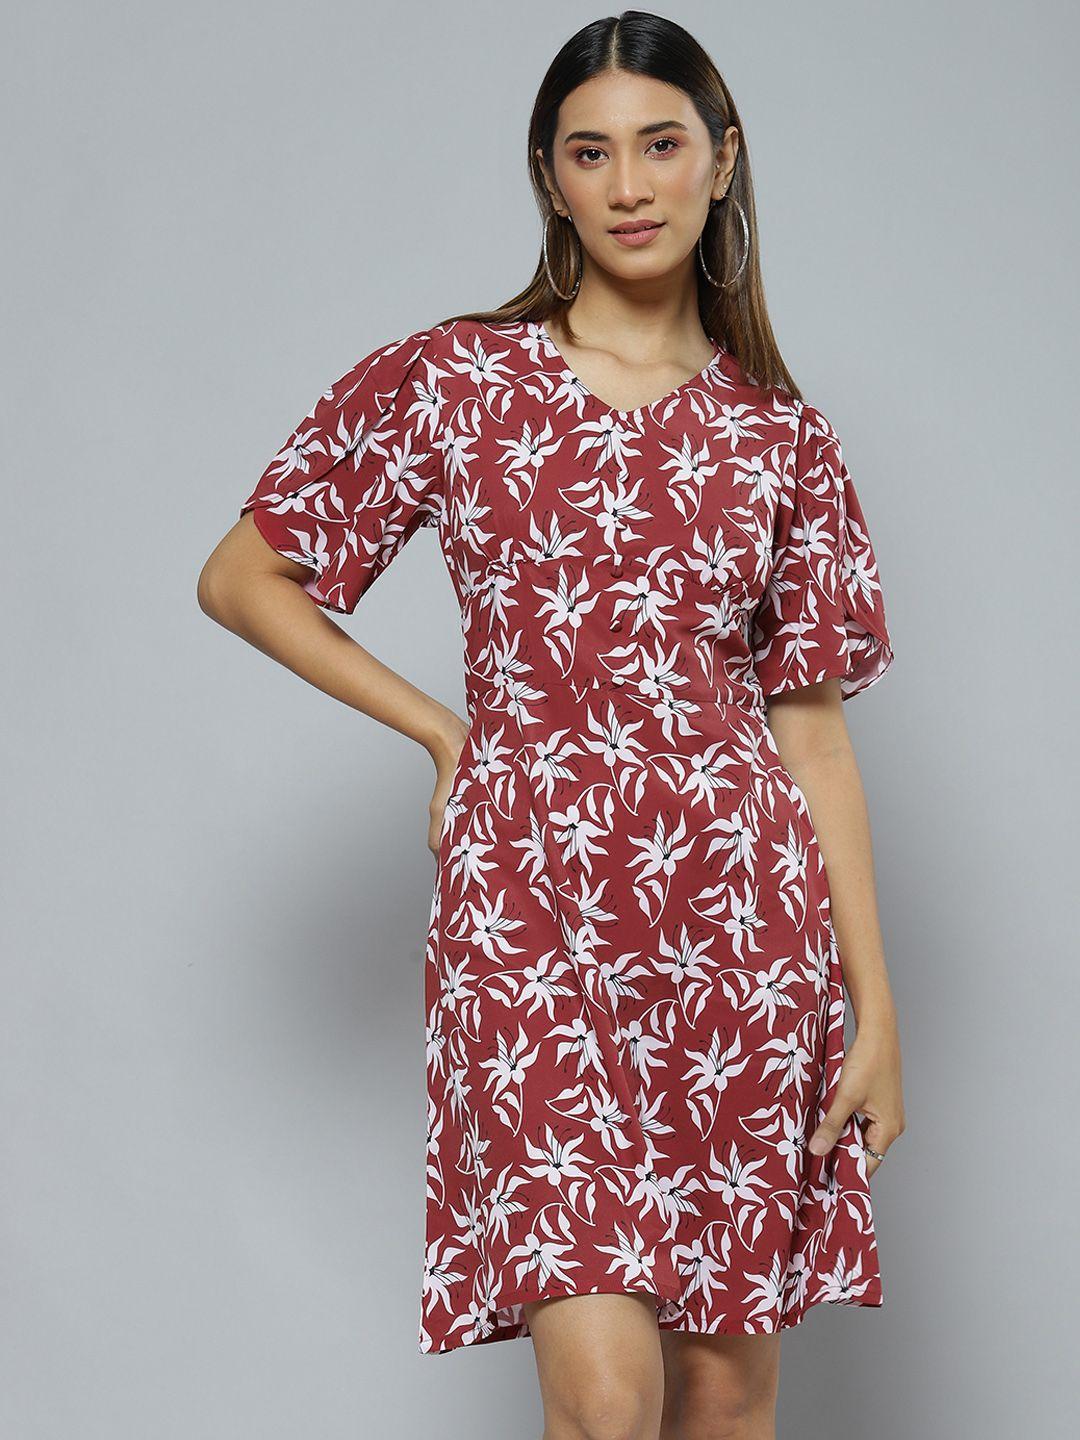 dennison red & white floral crepe a-line dress